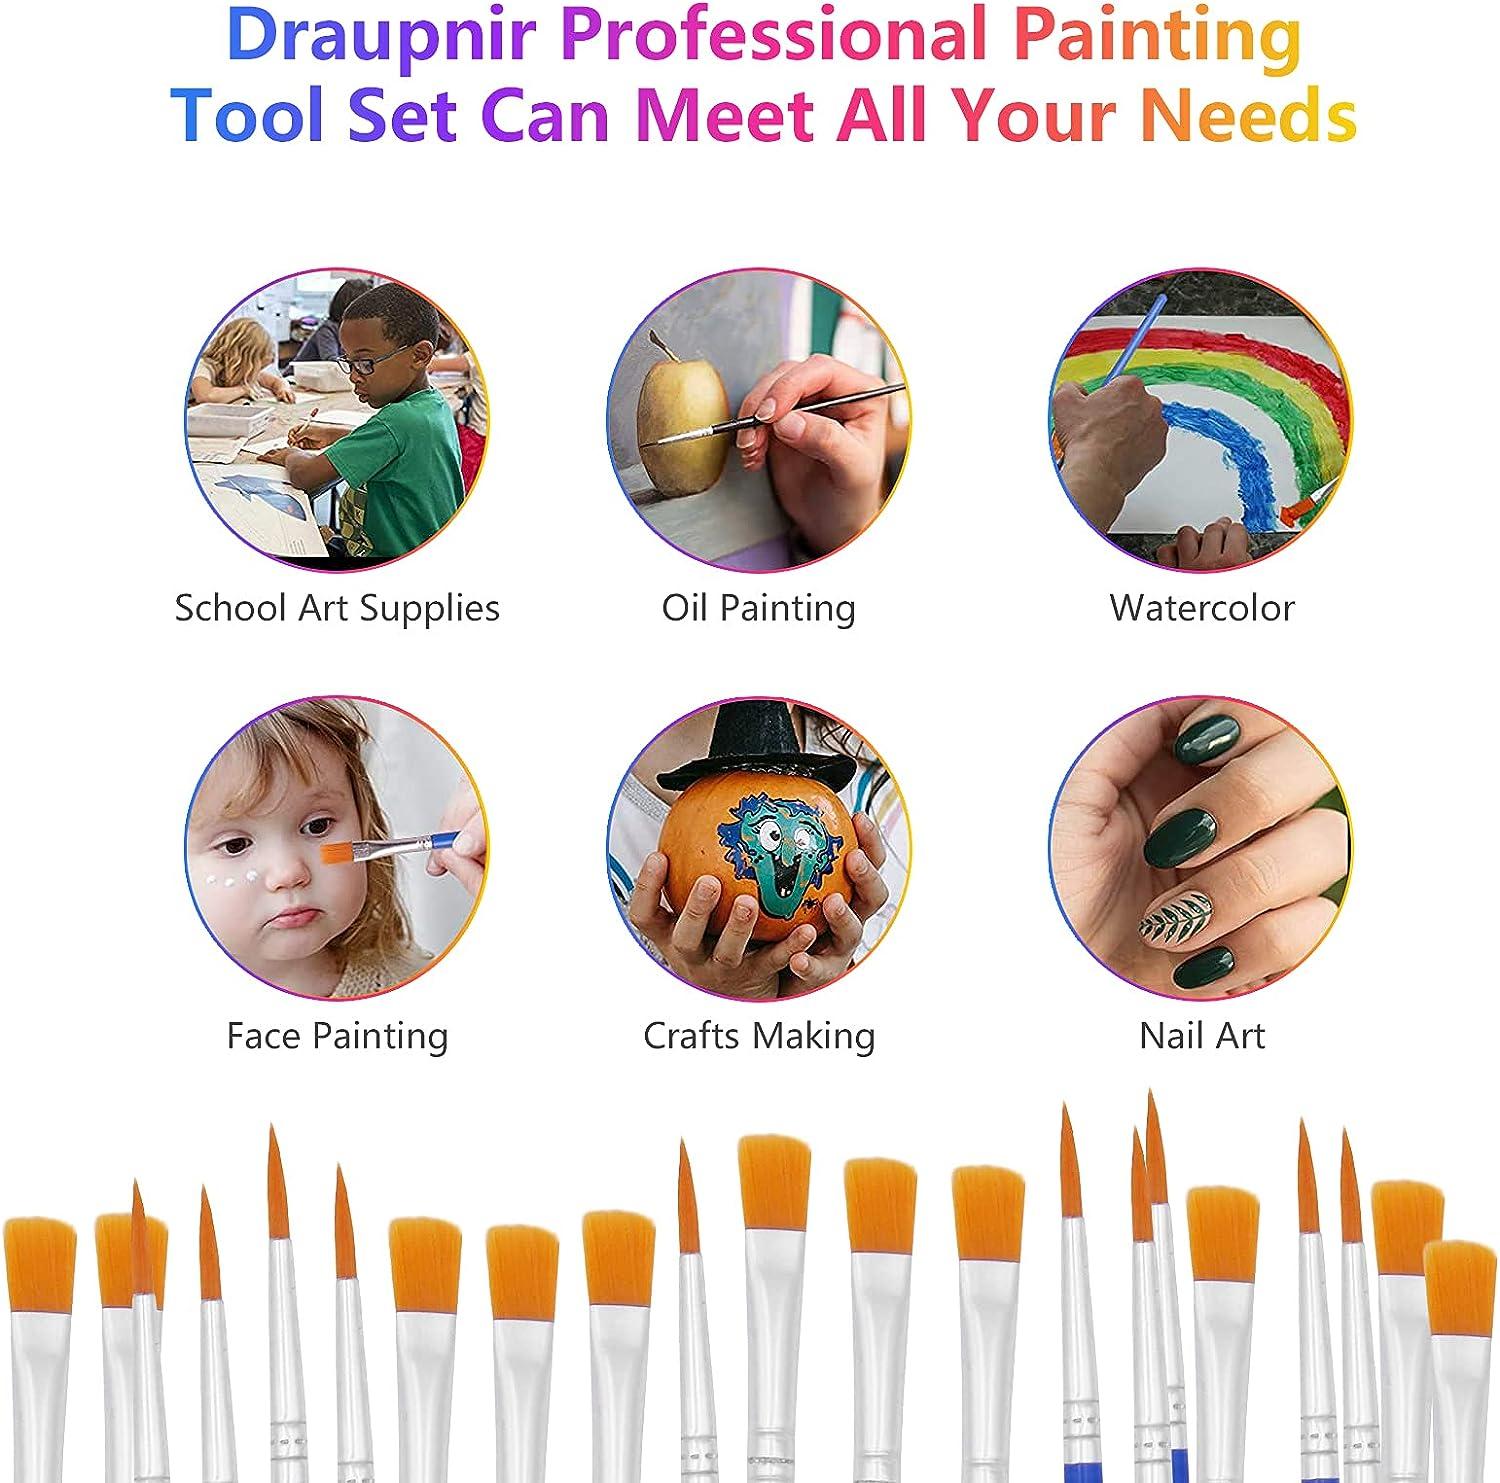 Art Paint Brush Set Craft Painting Brushes with Transparent